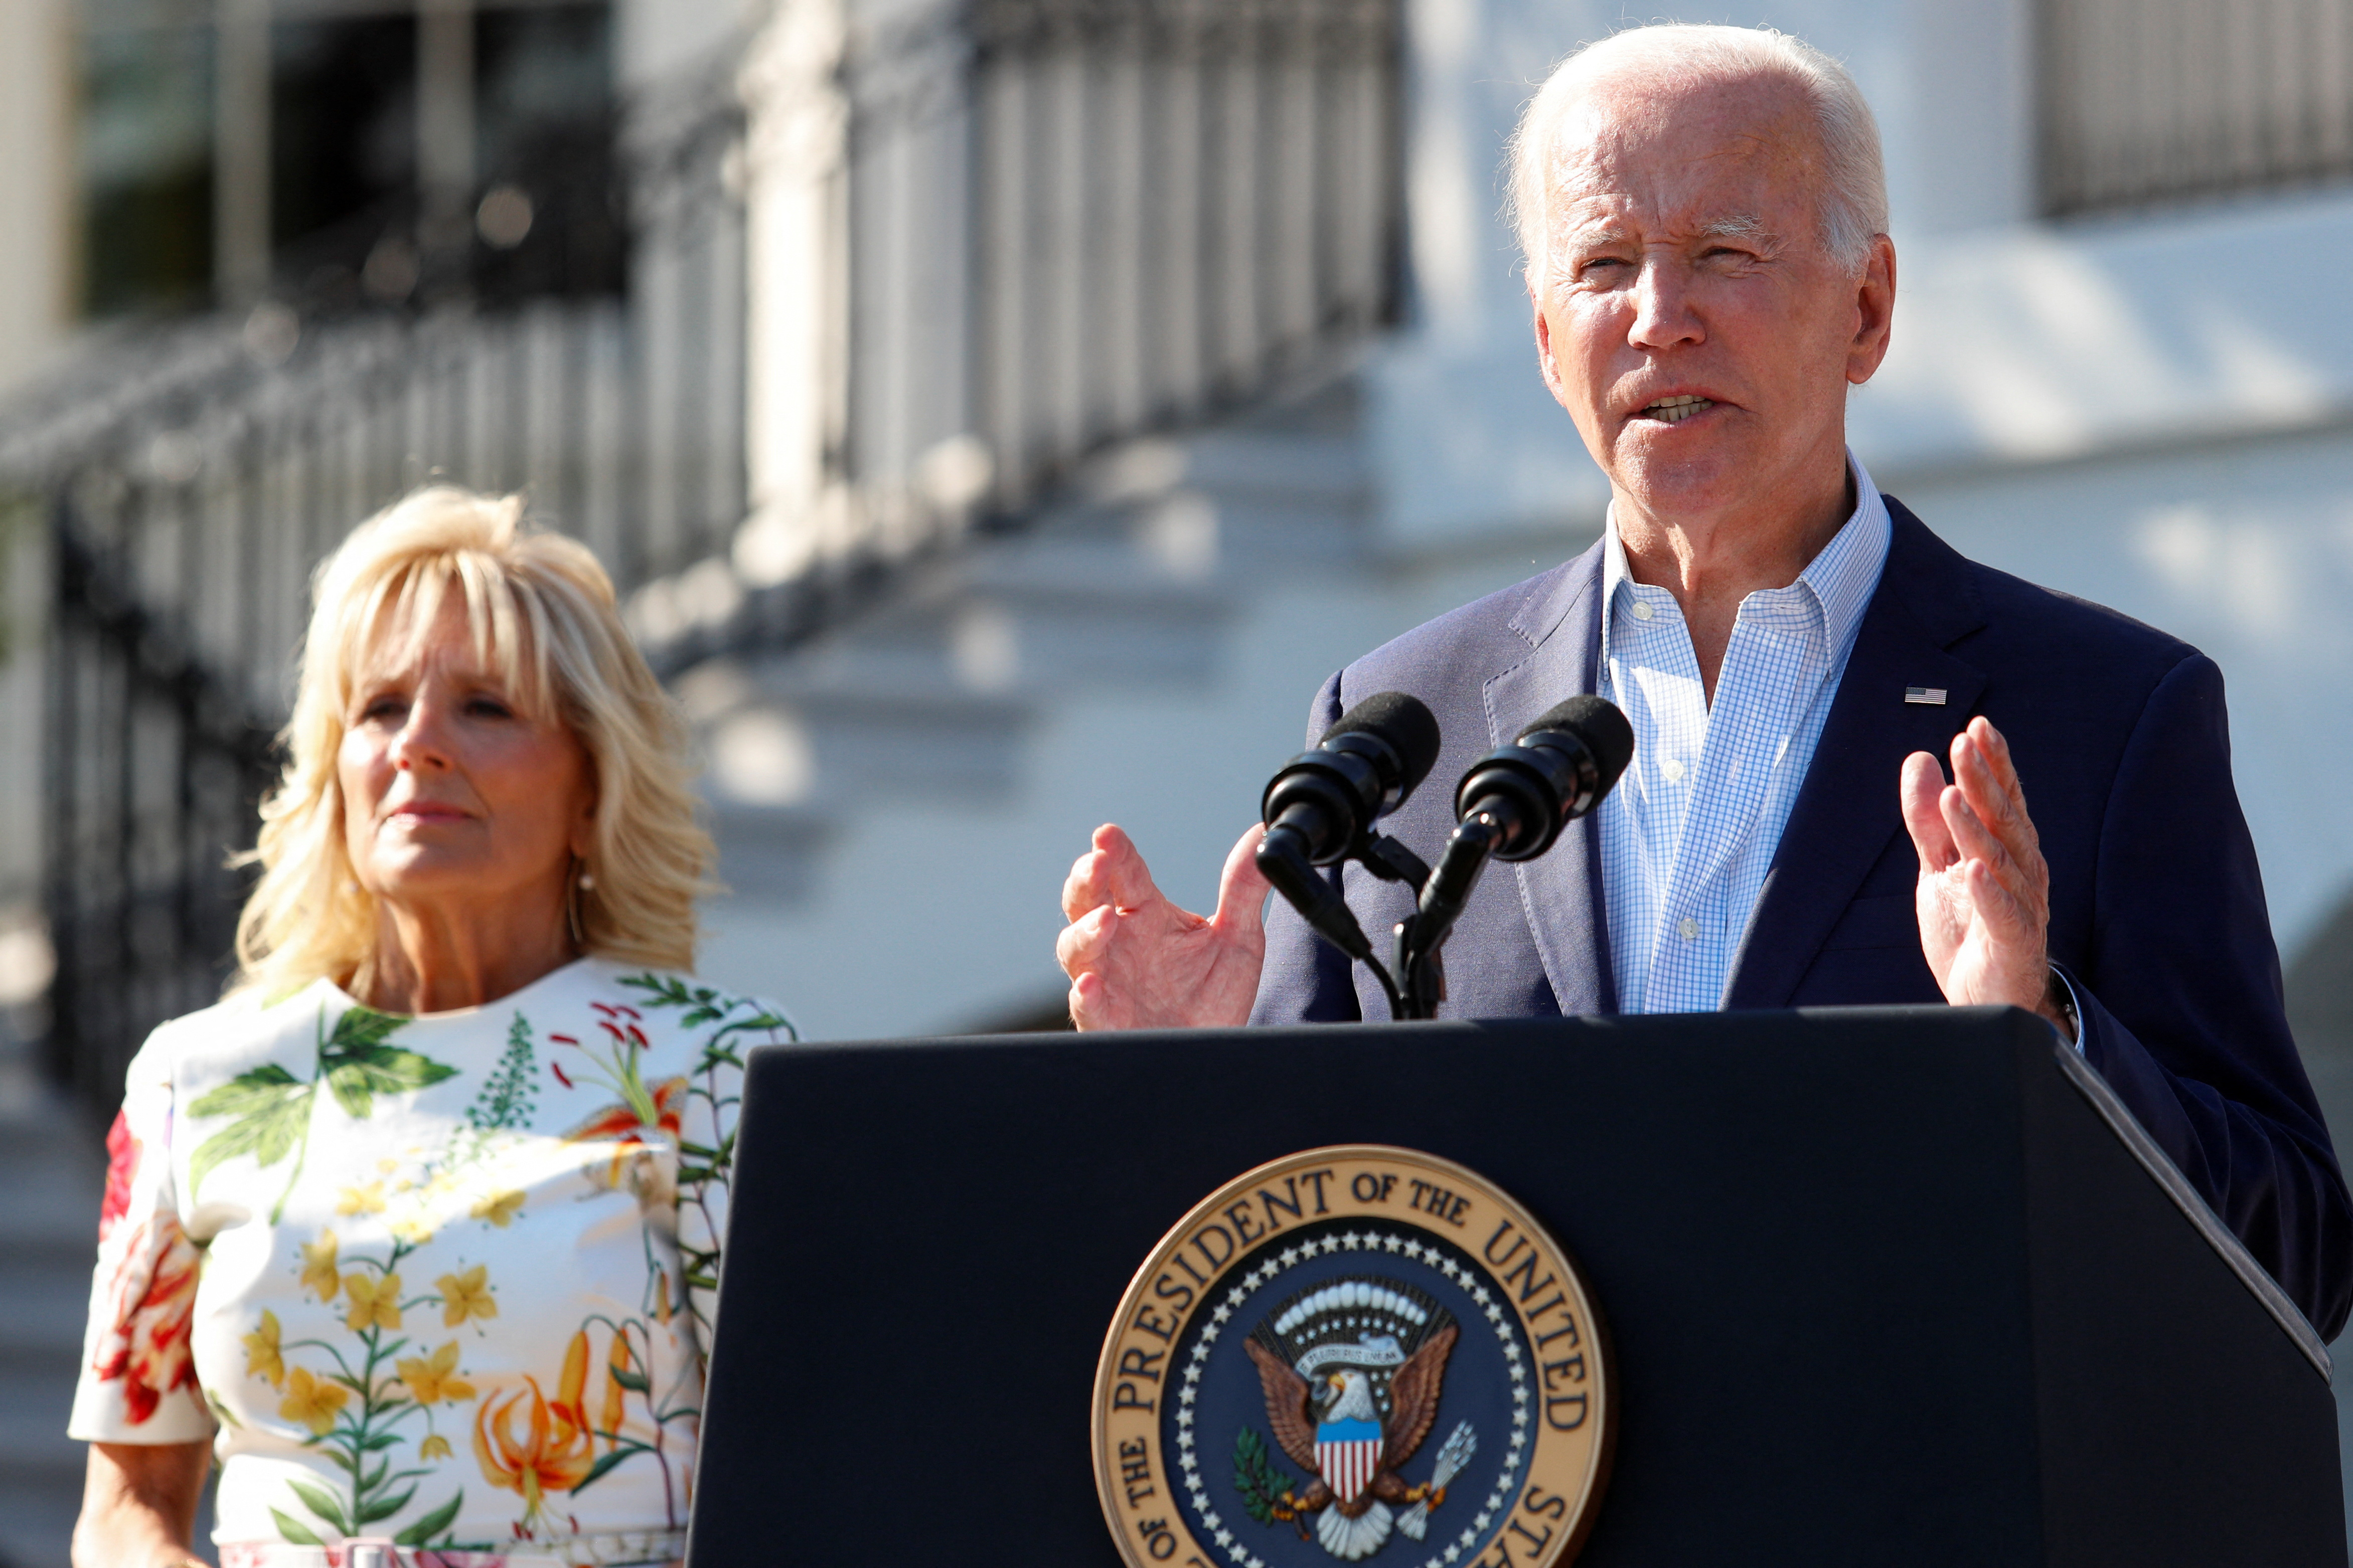 U.S. President Biden delivers remarks during an Independence Day celebration, in Washington